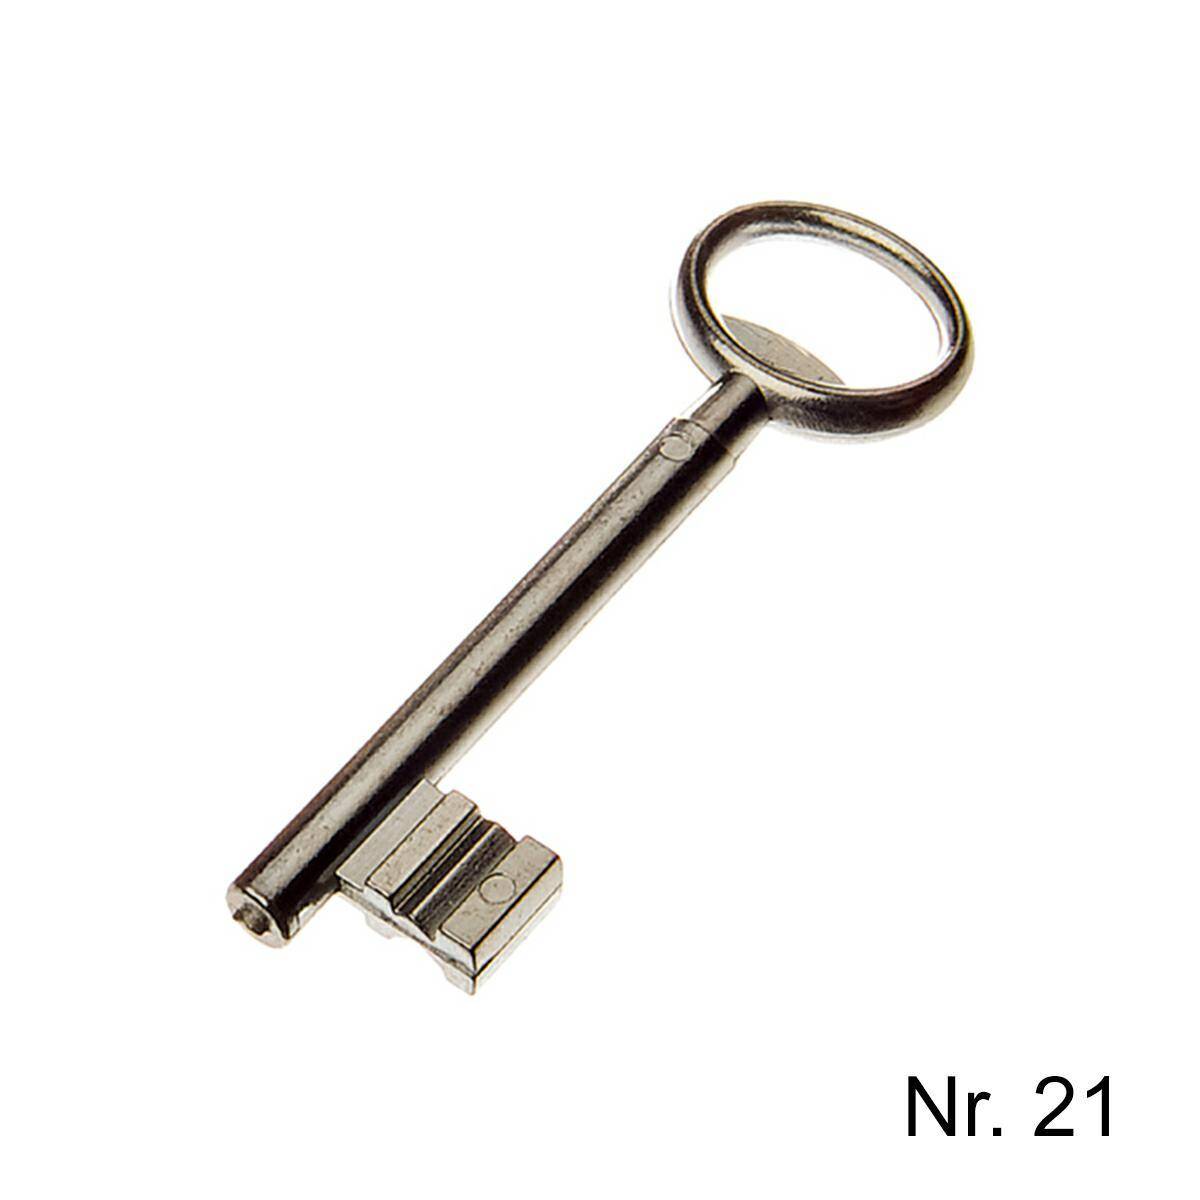 Cast key Jania for the lock - No. 21